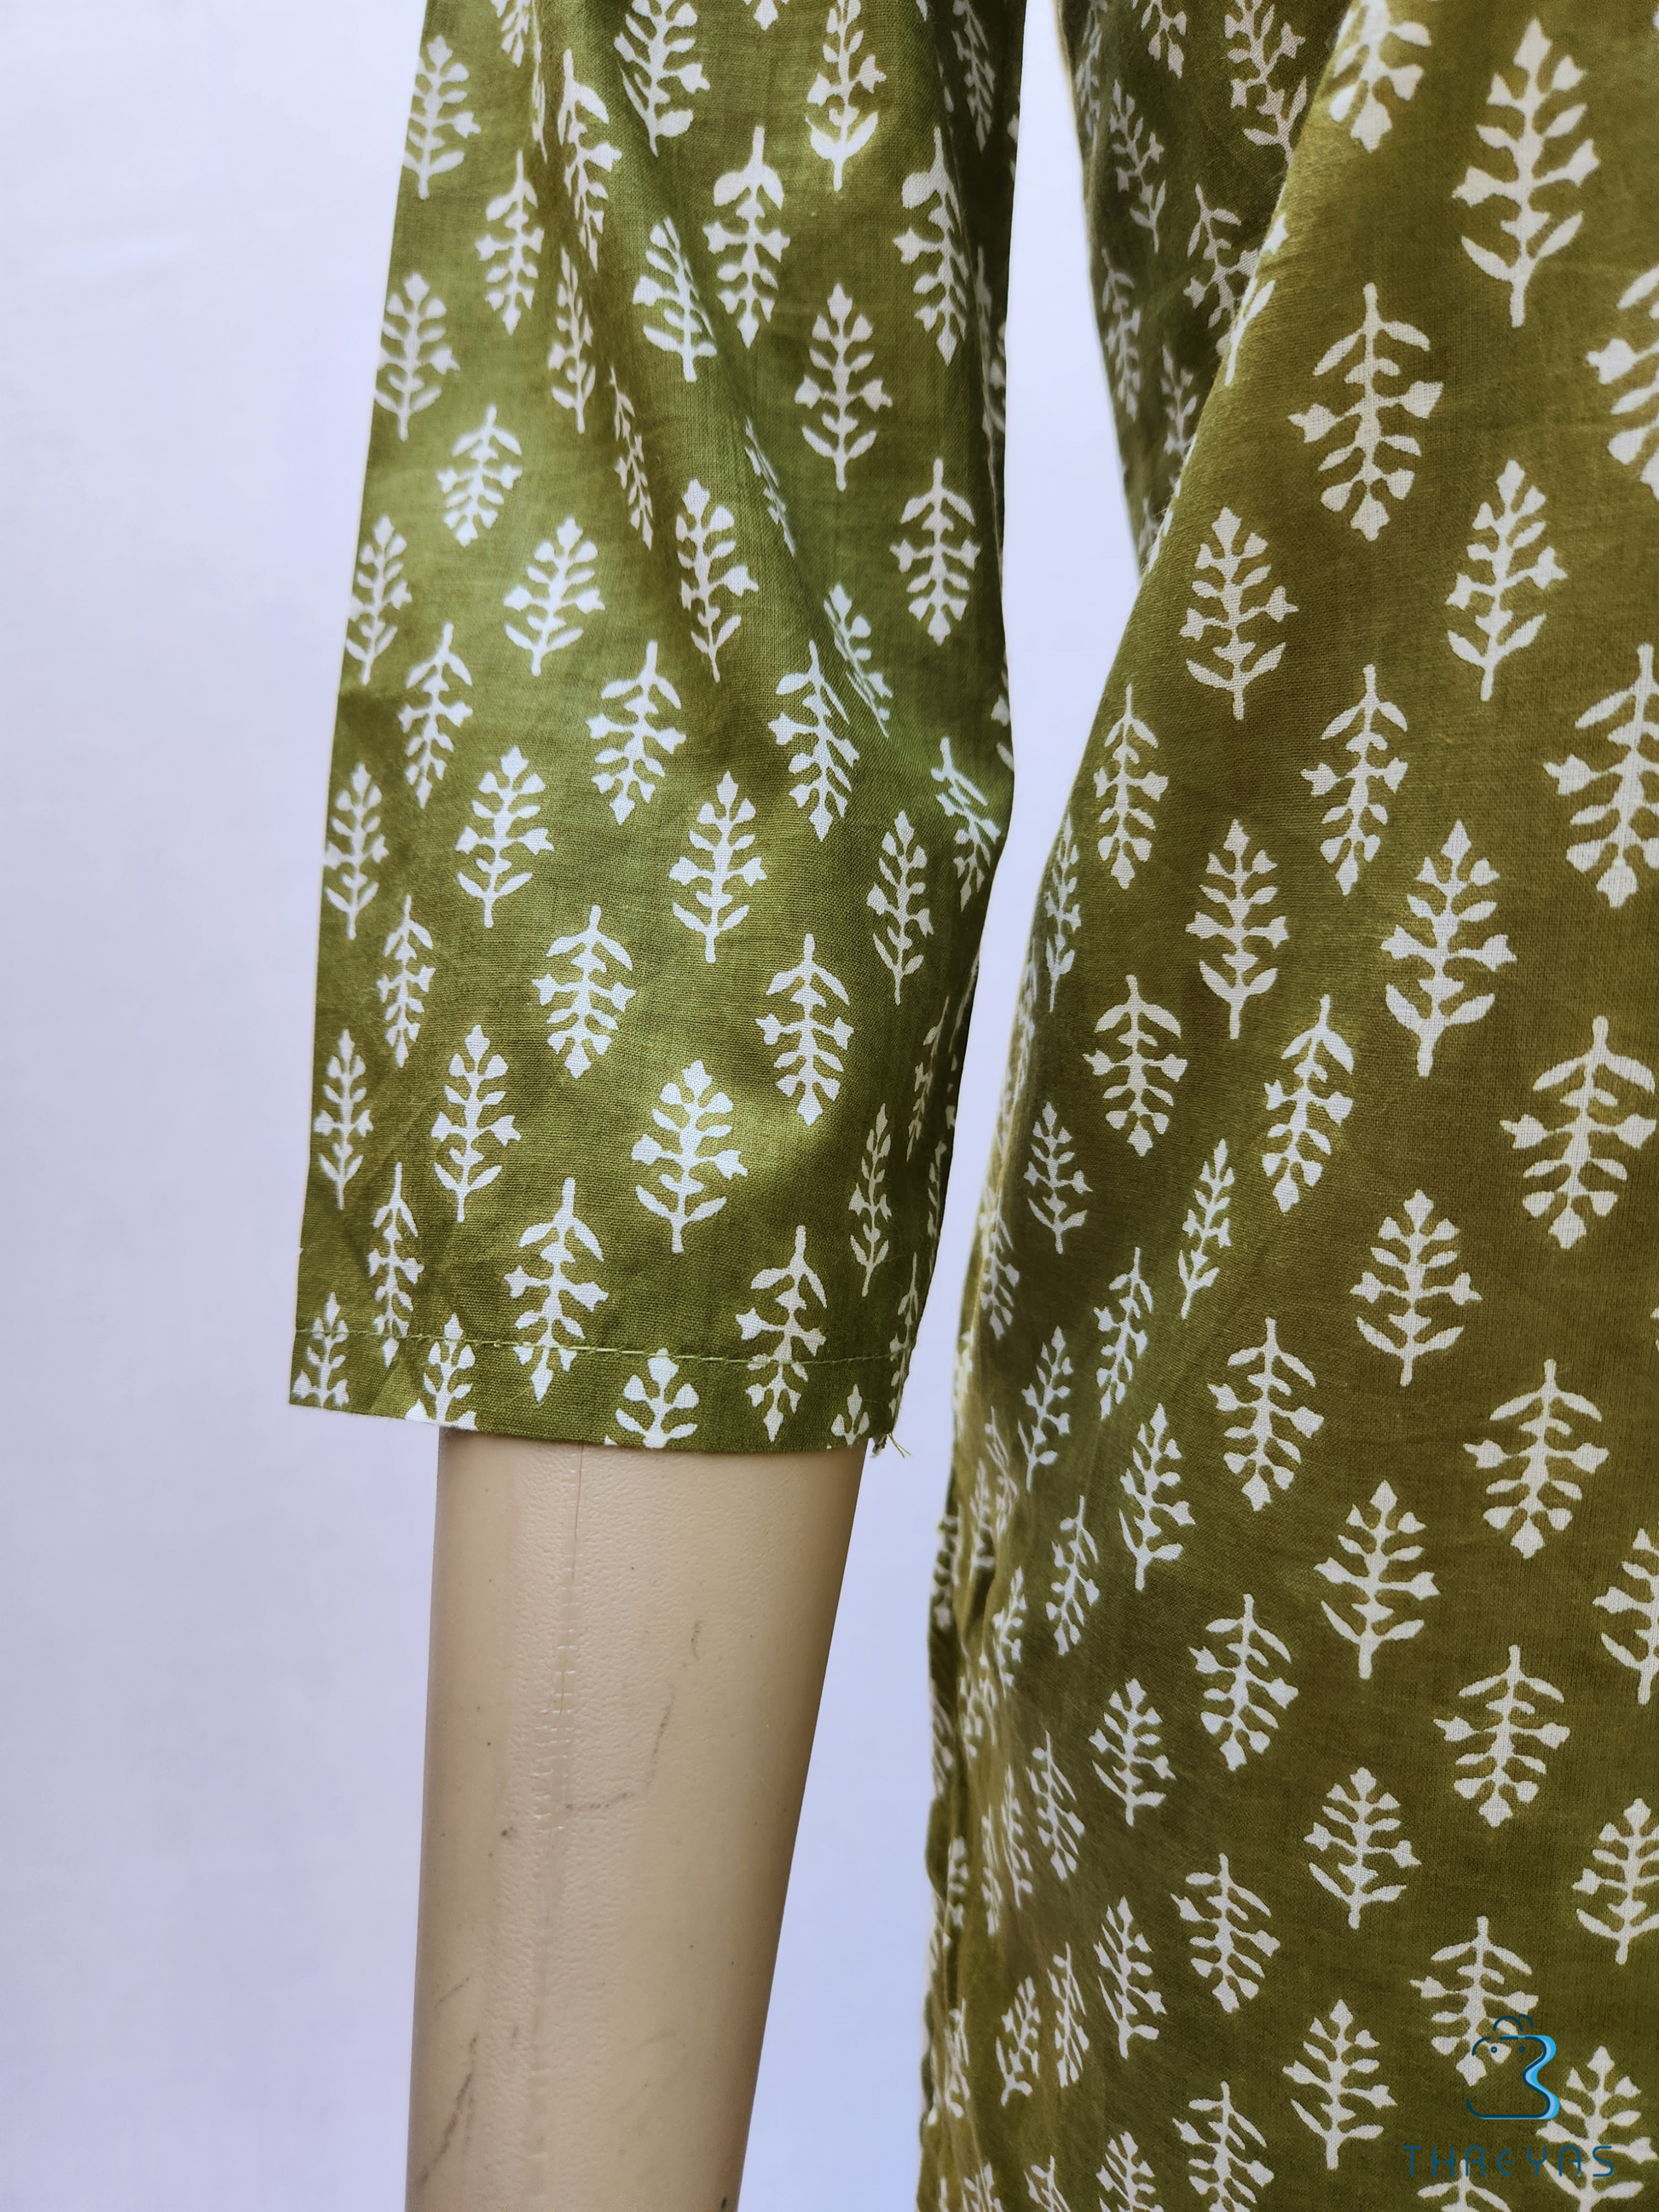 Olive Green Cotton Printed Kurthi set with Trousers for women | Stylish Kurthis & Kurtis Sets for Women | Threyas 